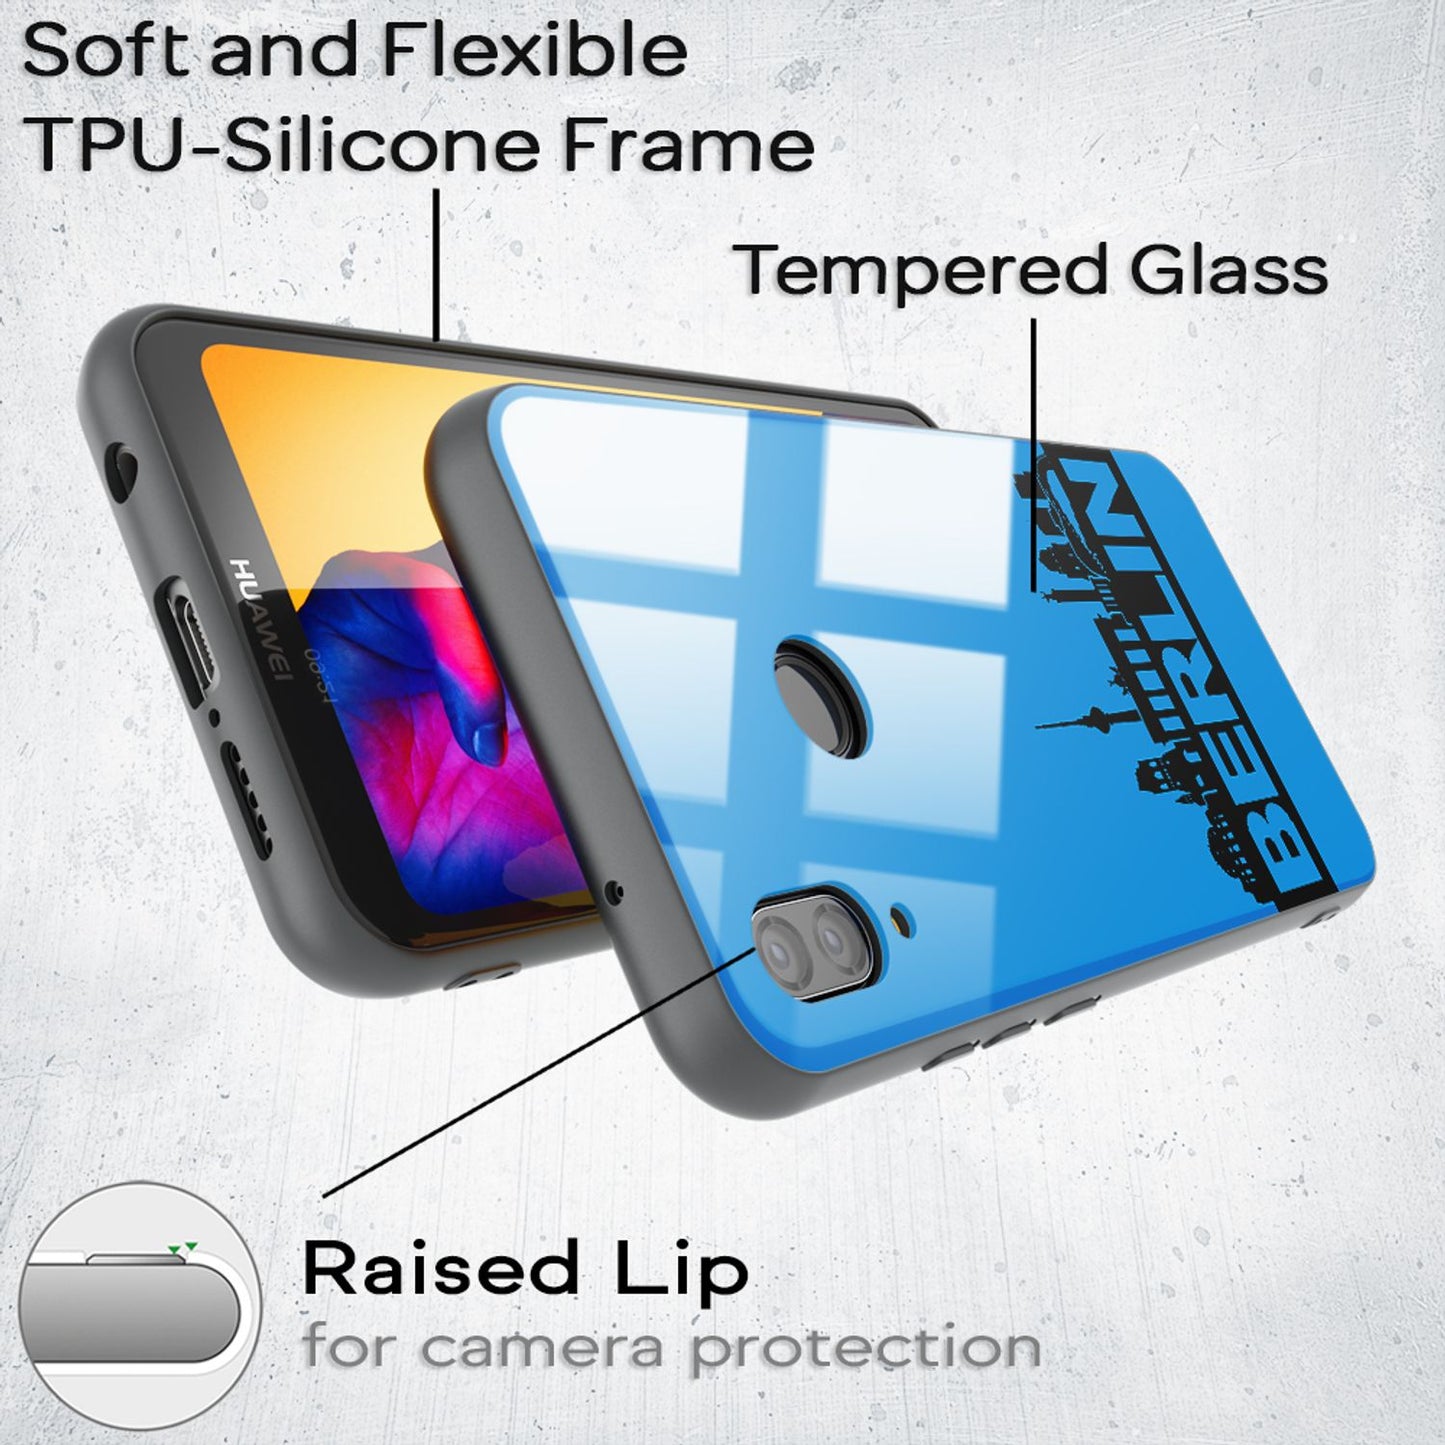 NALIA Motiv Handyhülle für Huawei P20 Lite, Schutz Case Cover Tasche Bumper TPU Etui